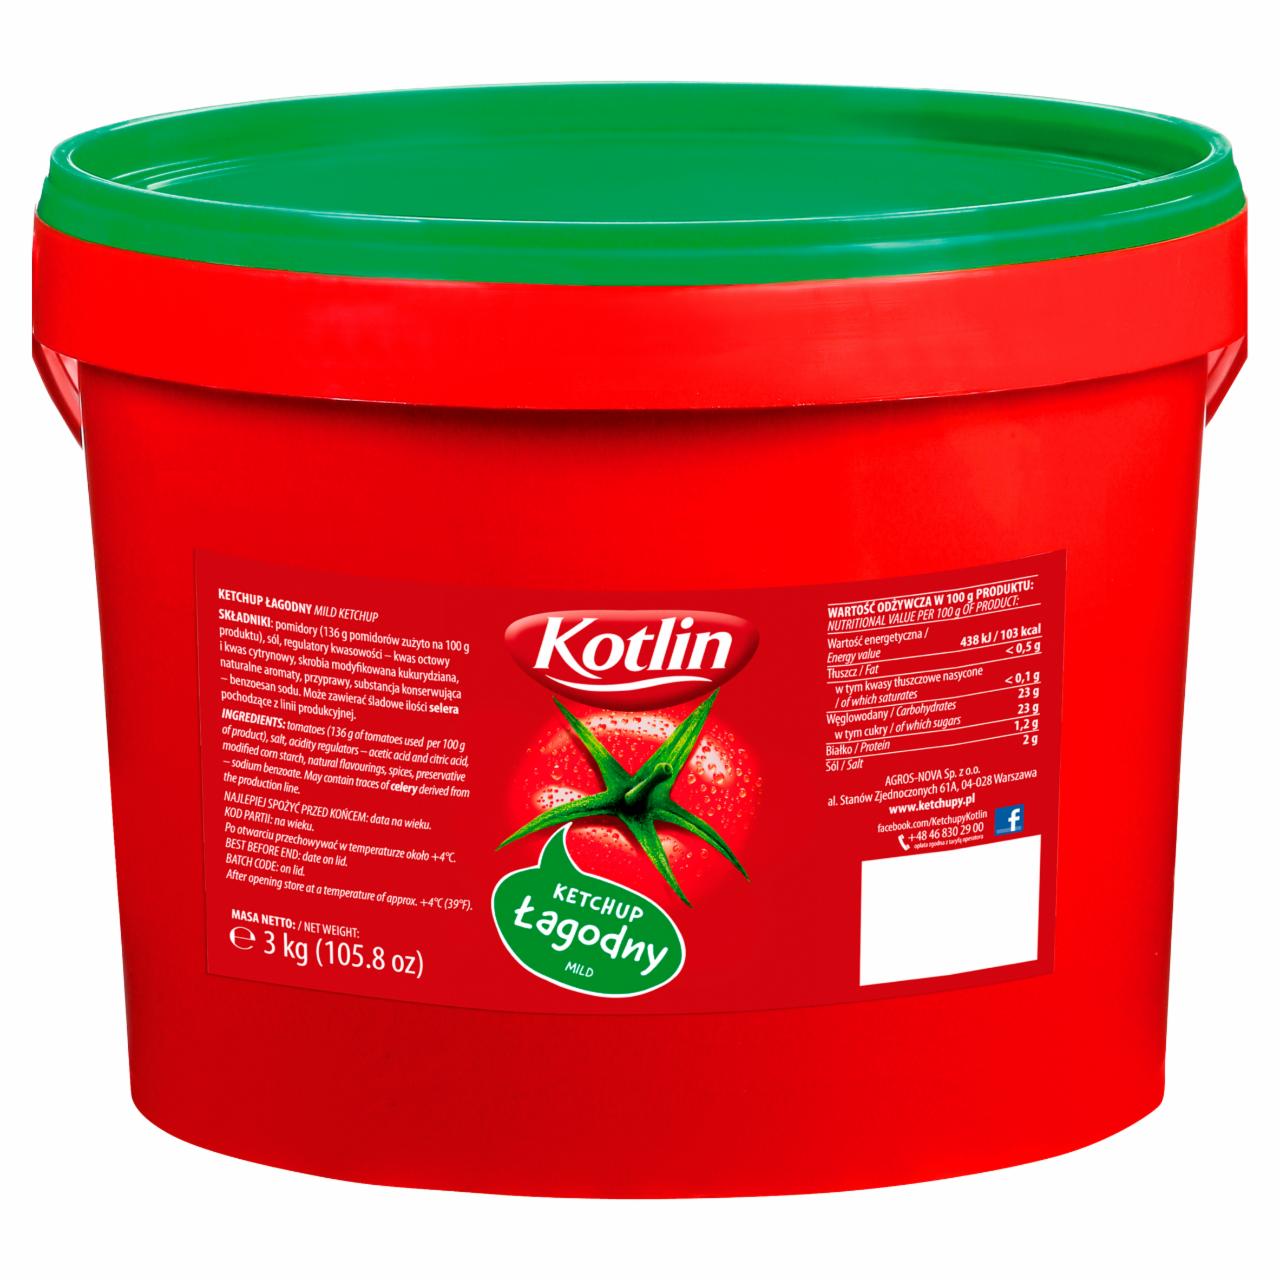 Zdjęcia - Kotlin Ketchup łagodny 3 kg